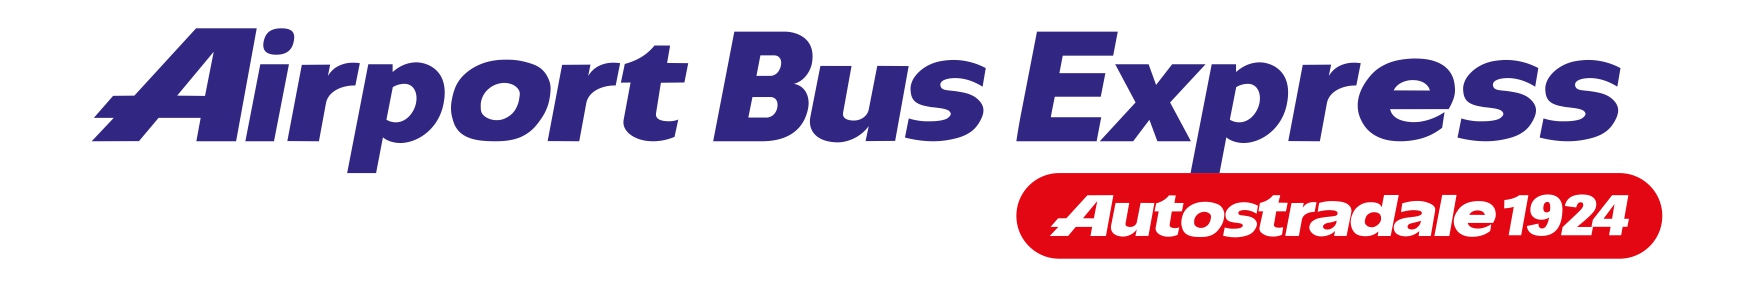 Airport Bus Express-logo